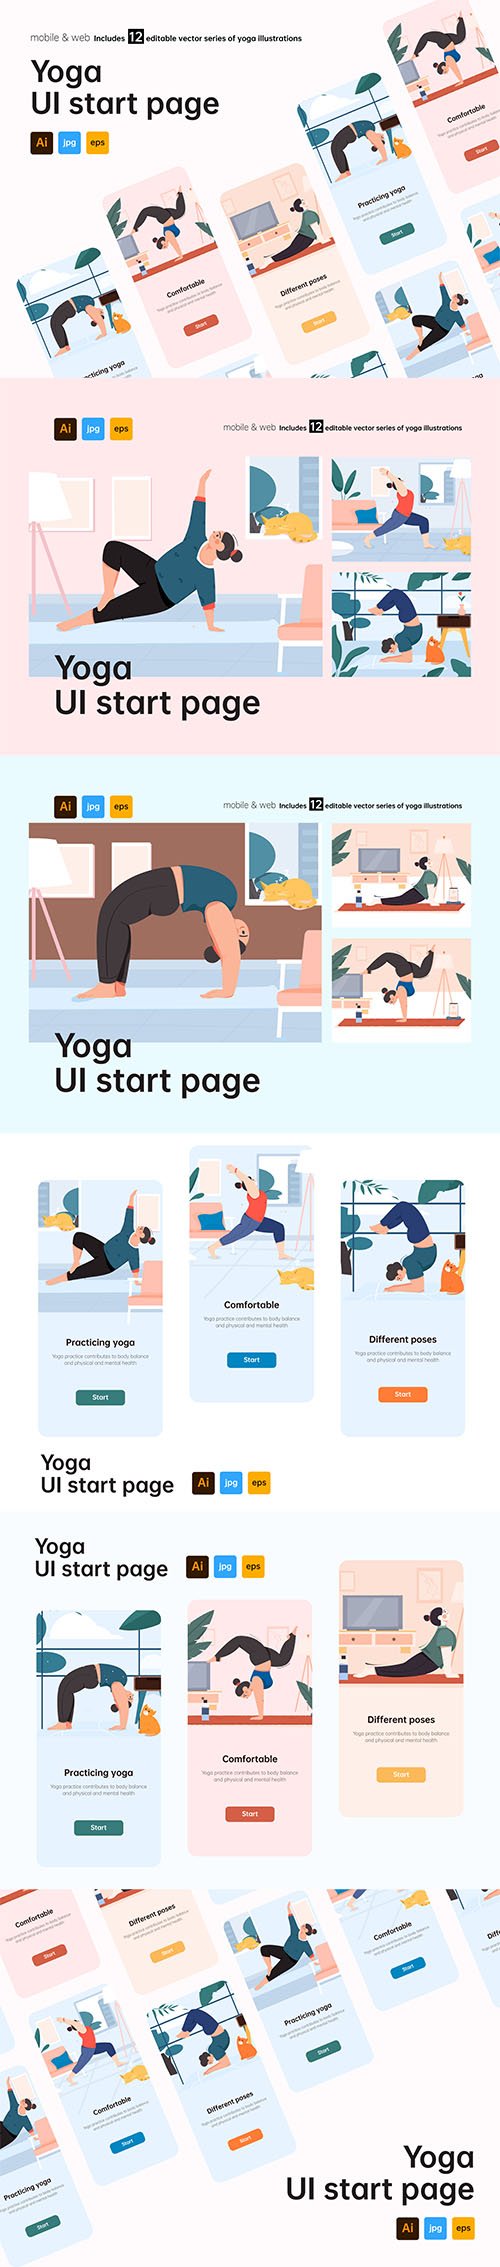 Yoga UI start page